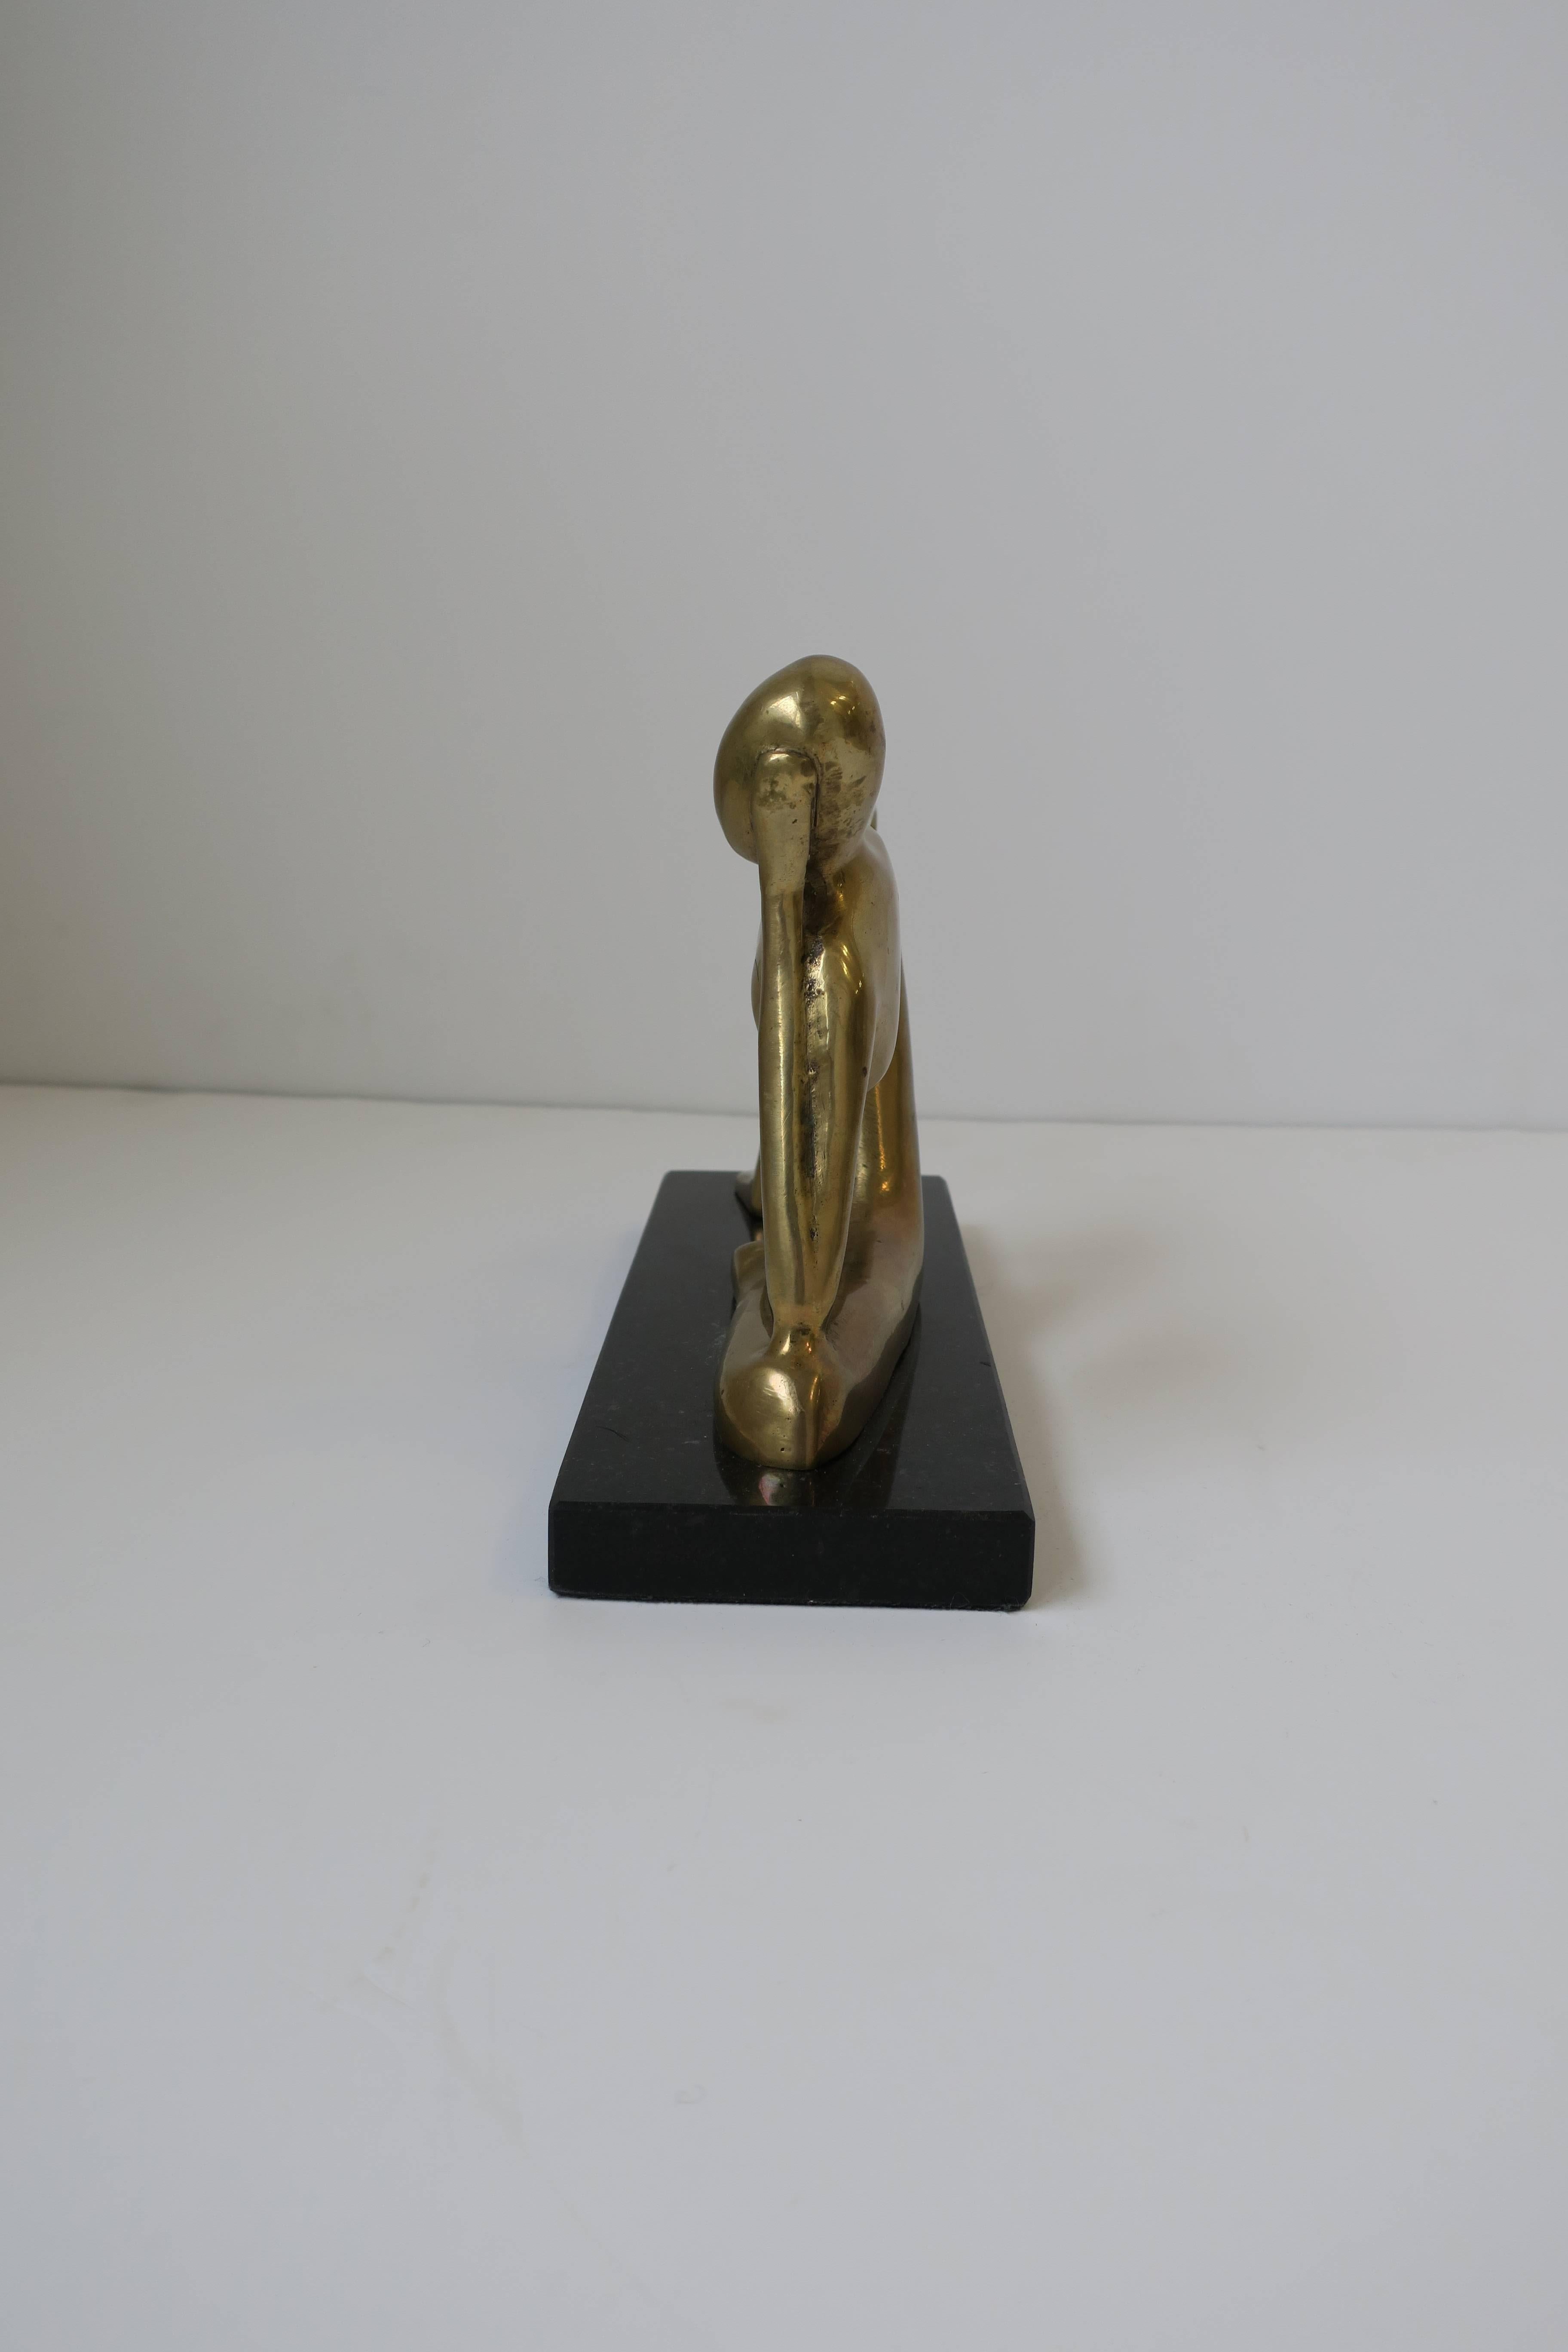 20th Century Brass Figural Sculpture on Black Marble Base after Artist Jean Arp